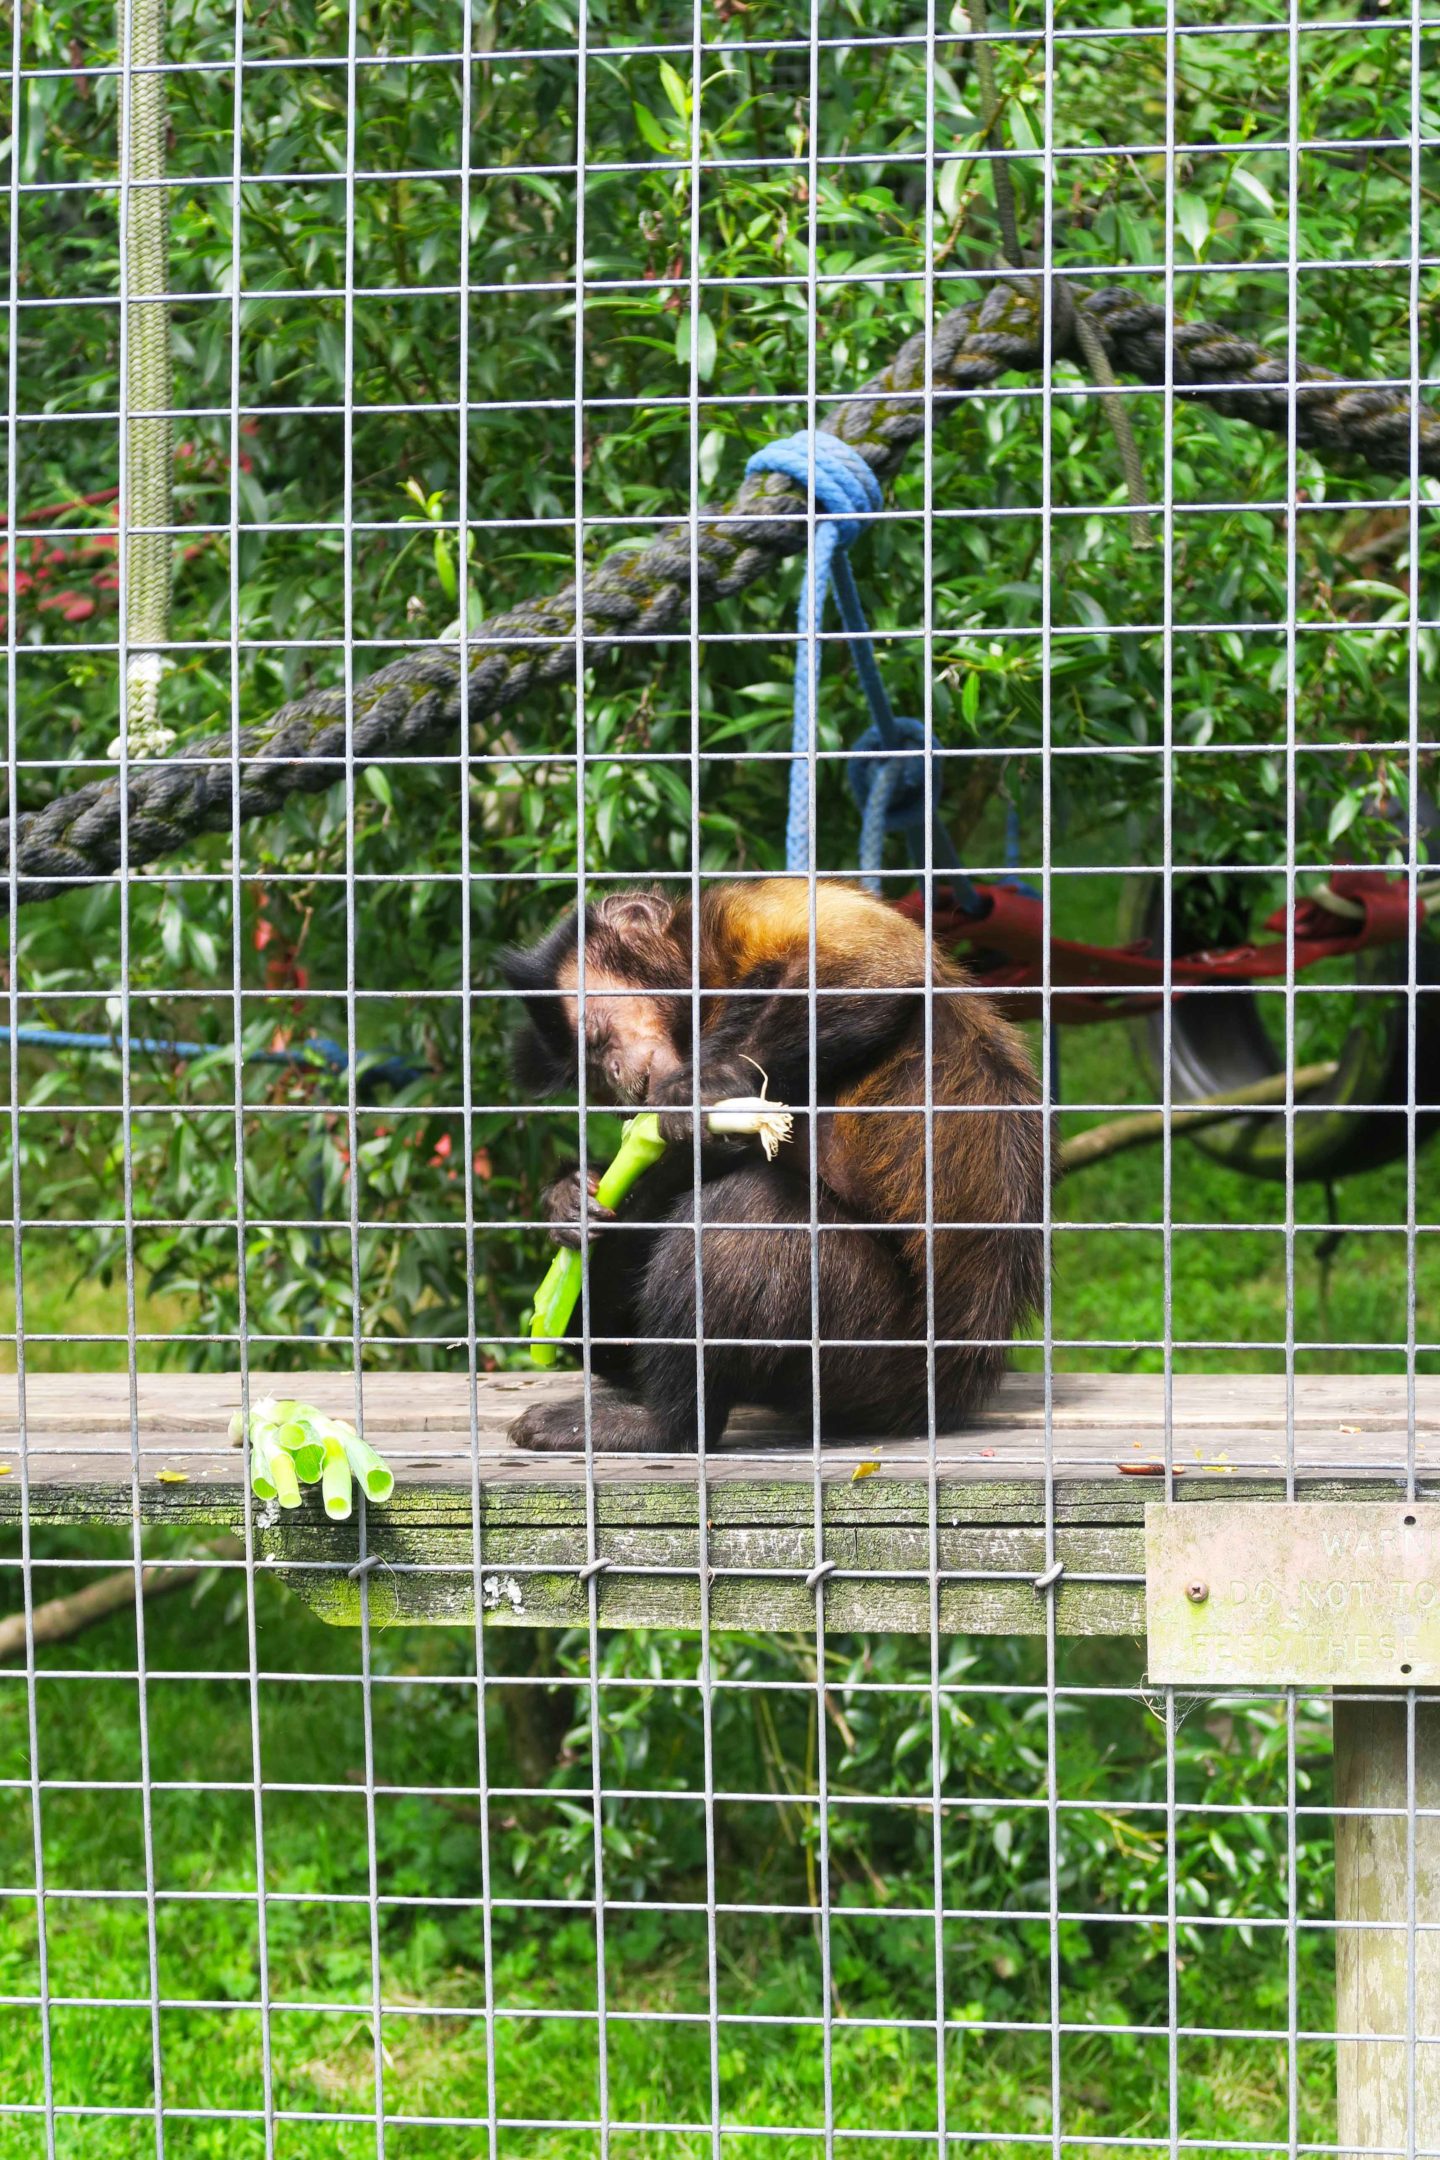 capuchin with leek in looe monkey sanctuary in cornwall